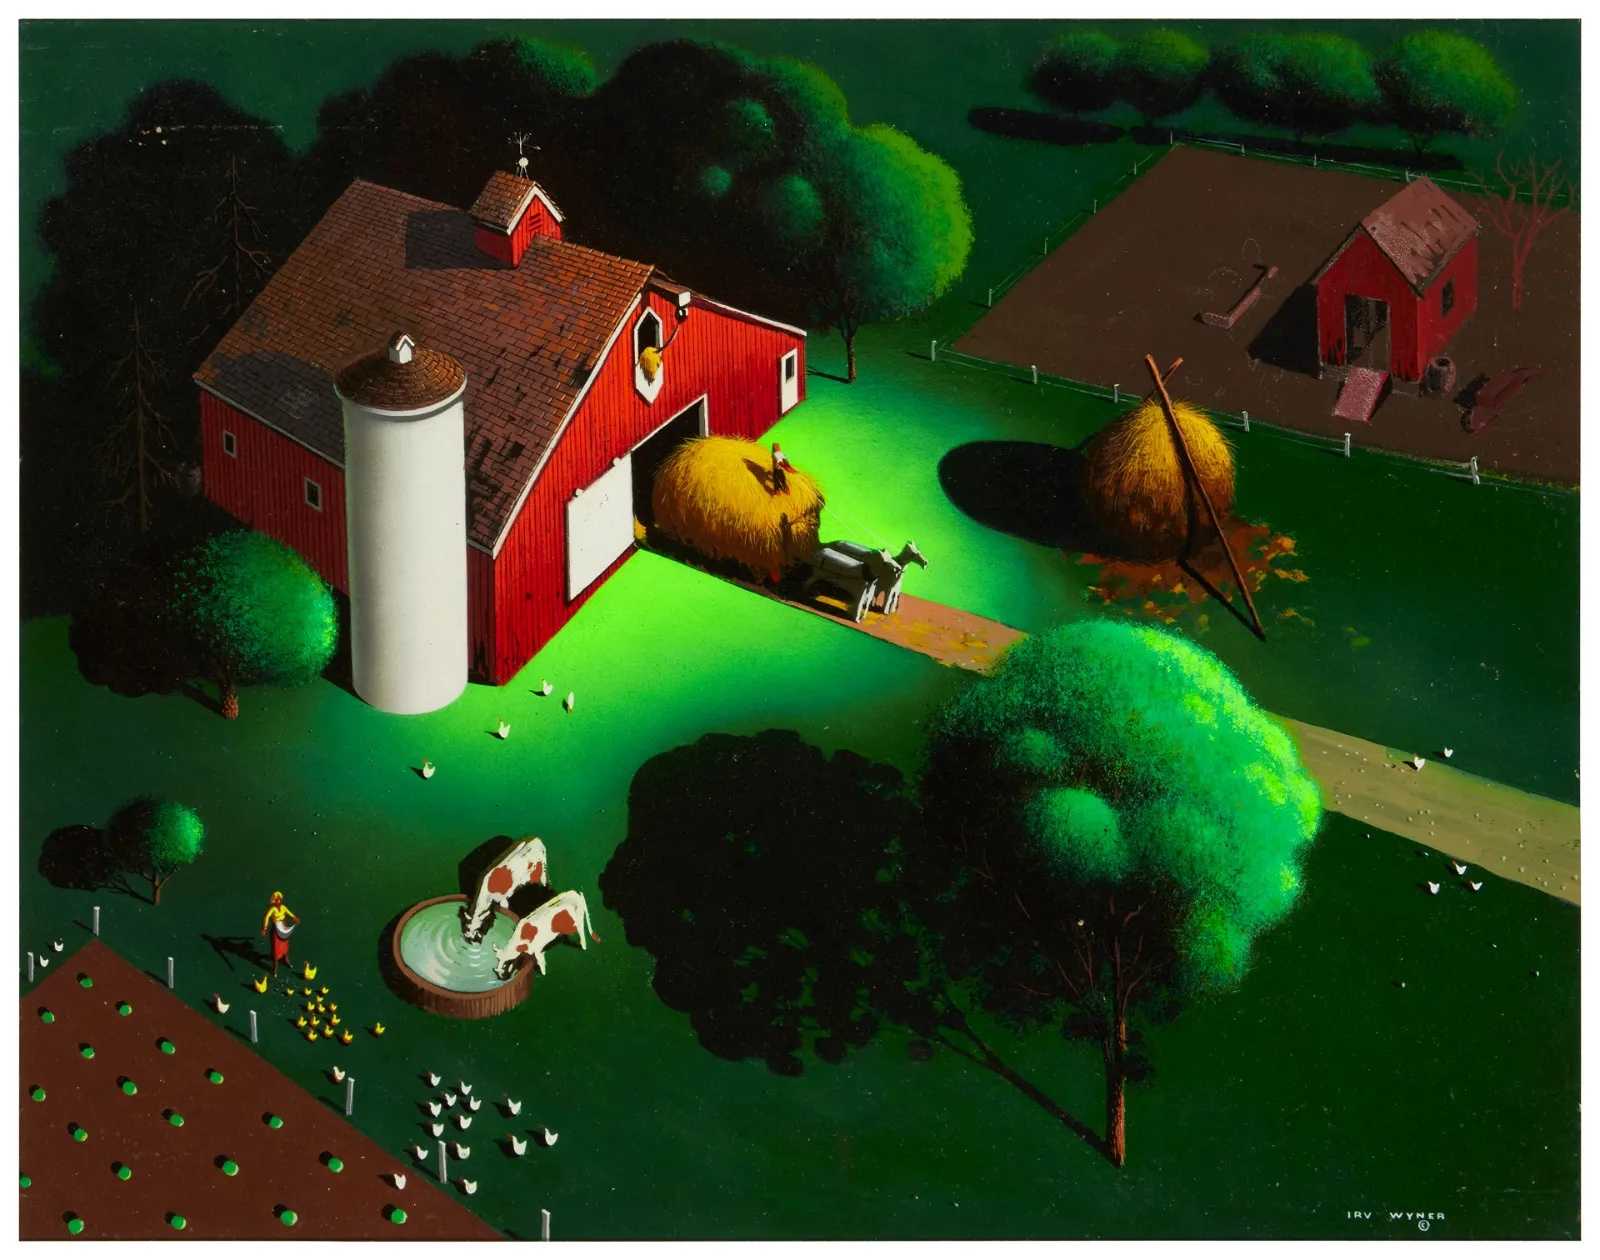 Irv Wyner, 'Light and Shadows - Farm Scene,' estimated at $1,000-$2,000 at John Moran.